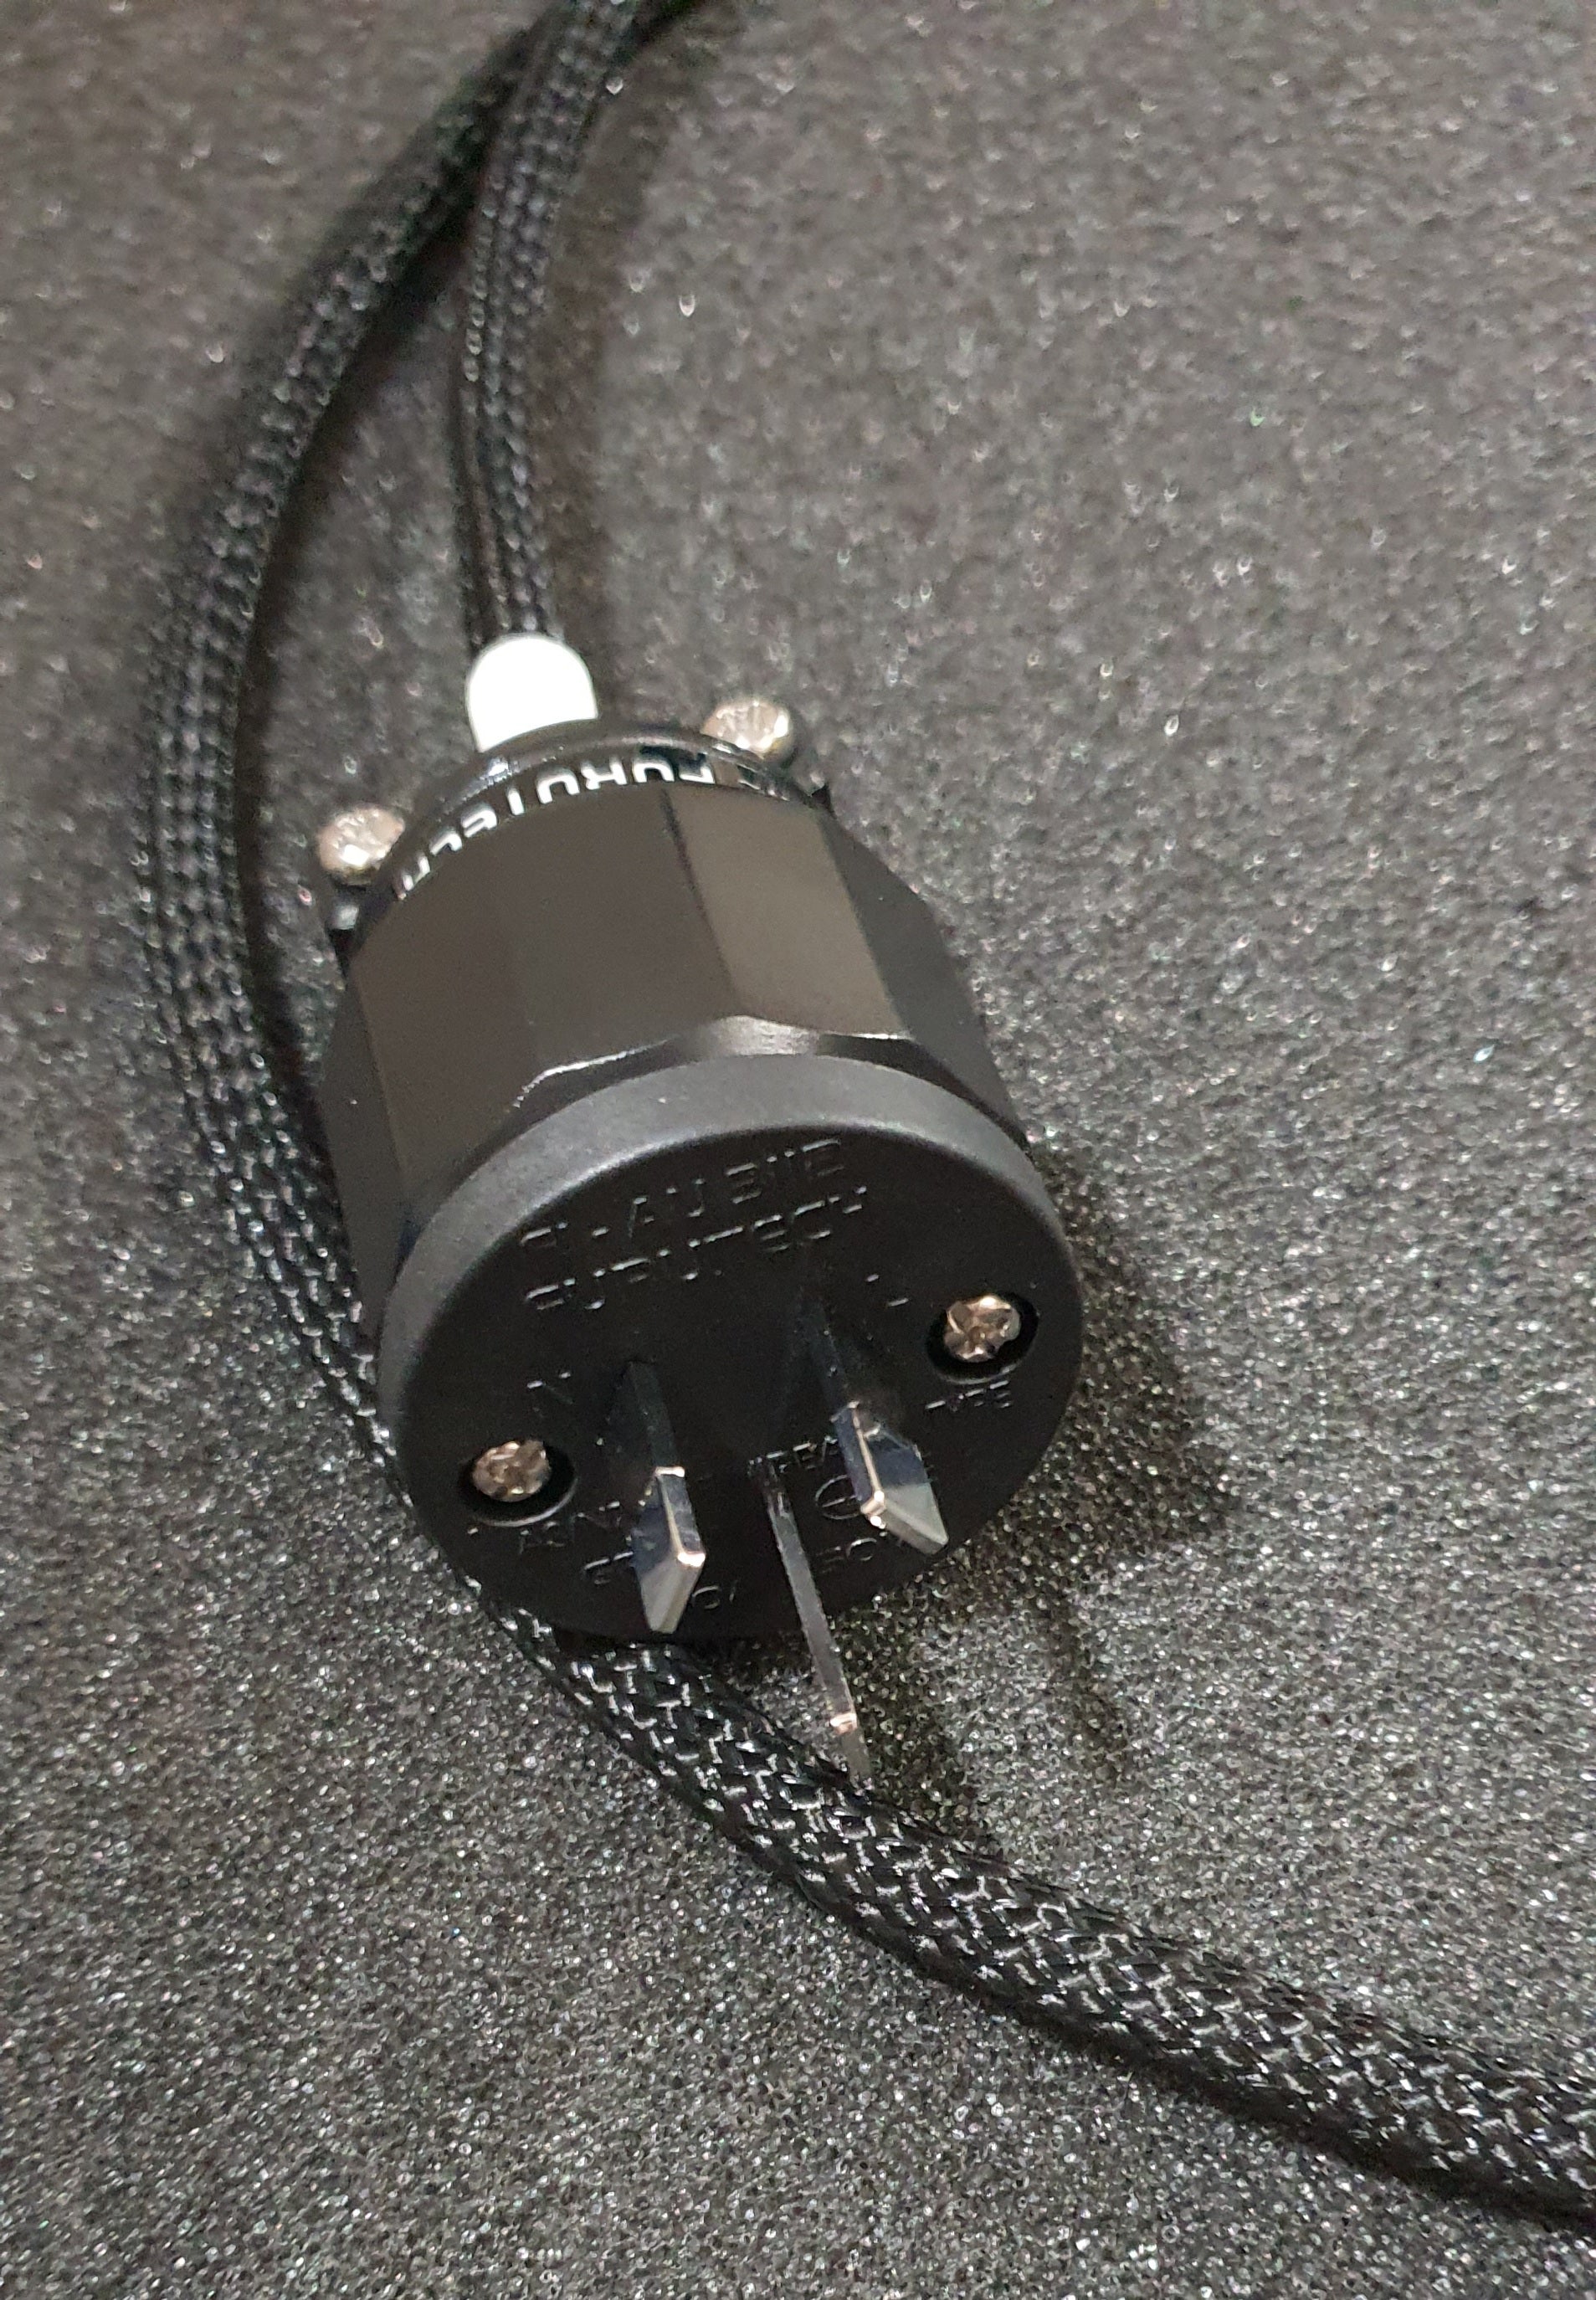 NiCU ™ Audiophile Power Cable